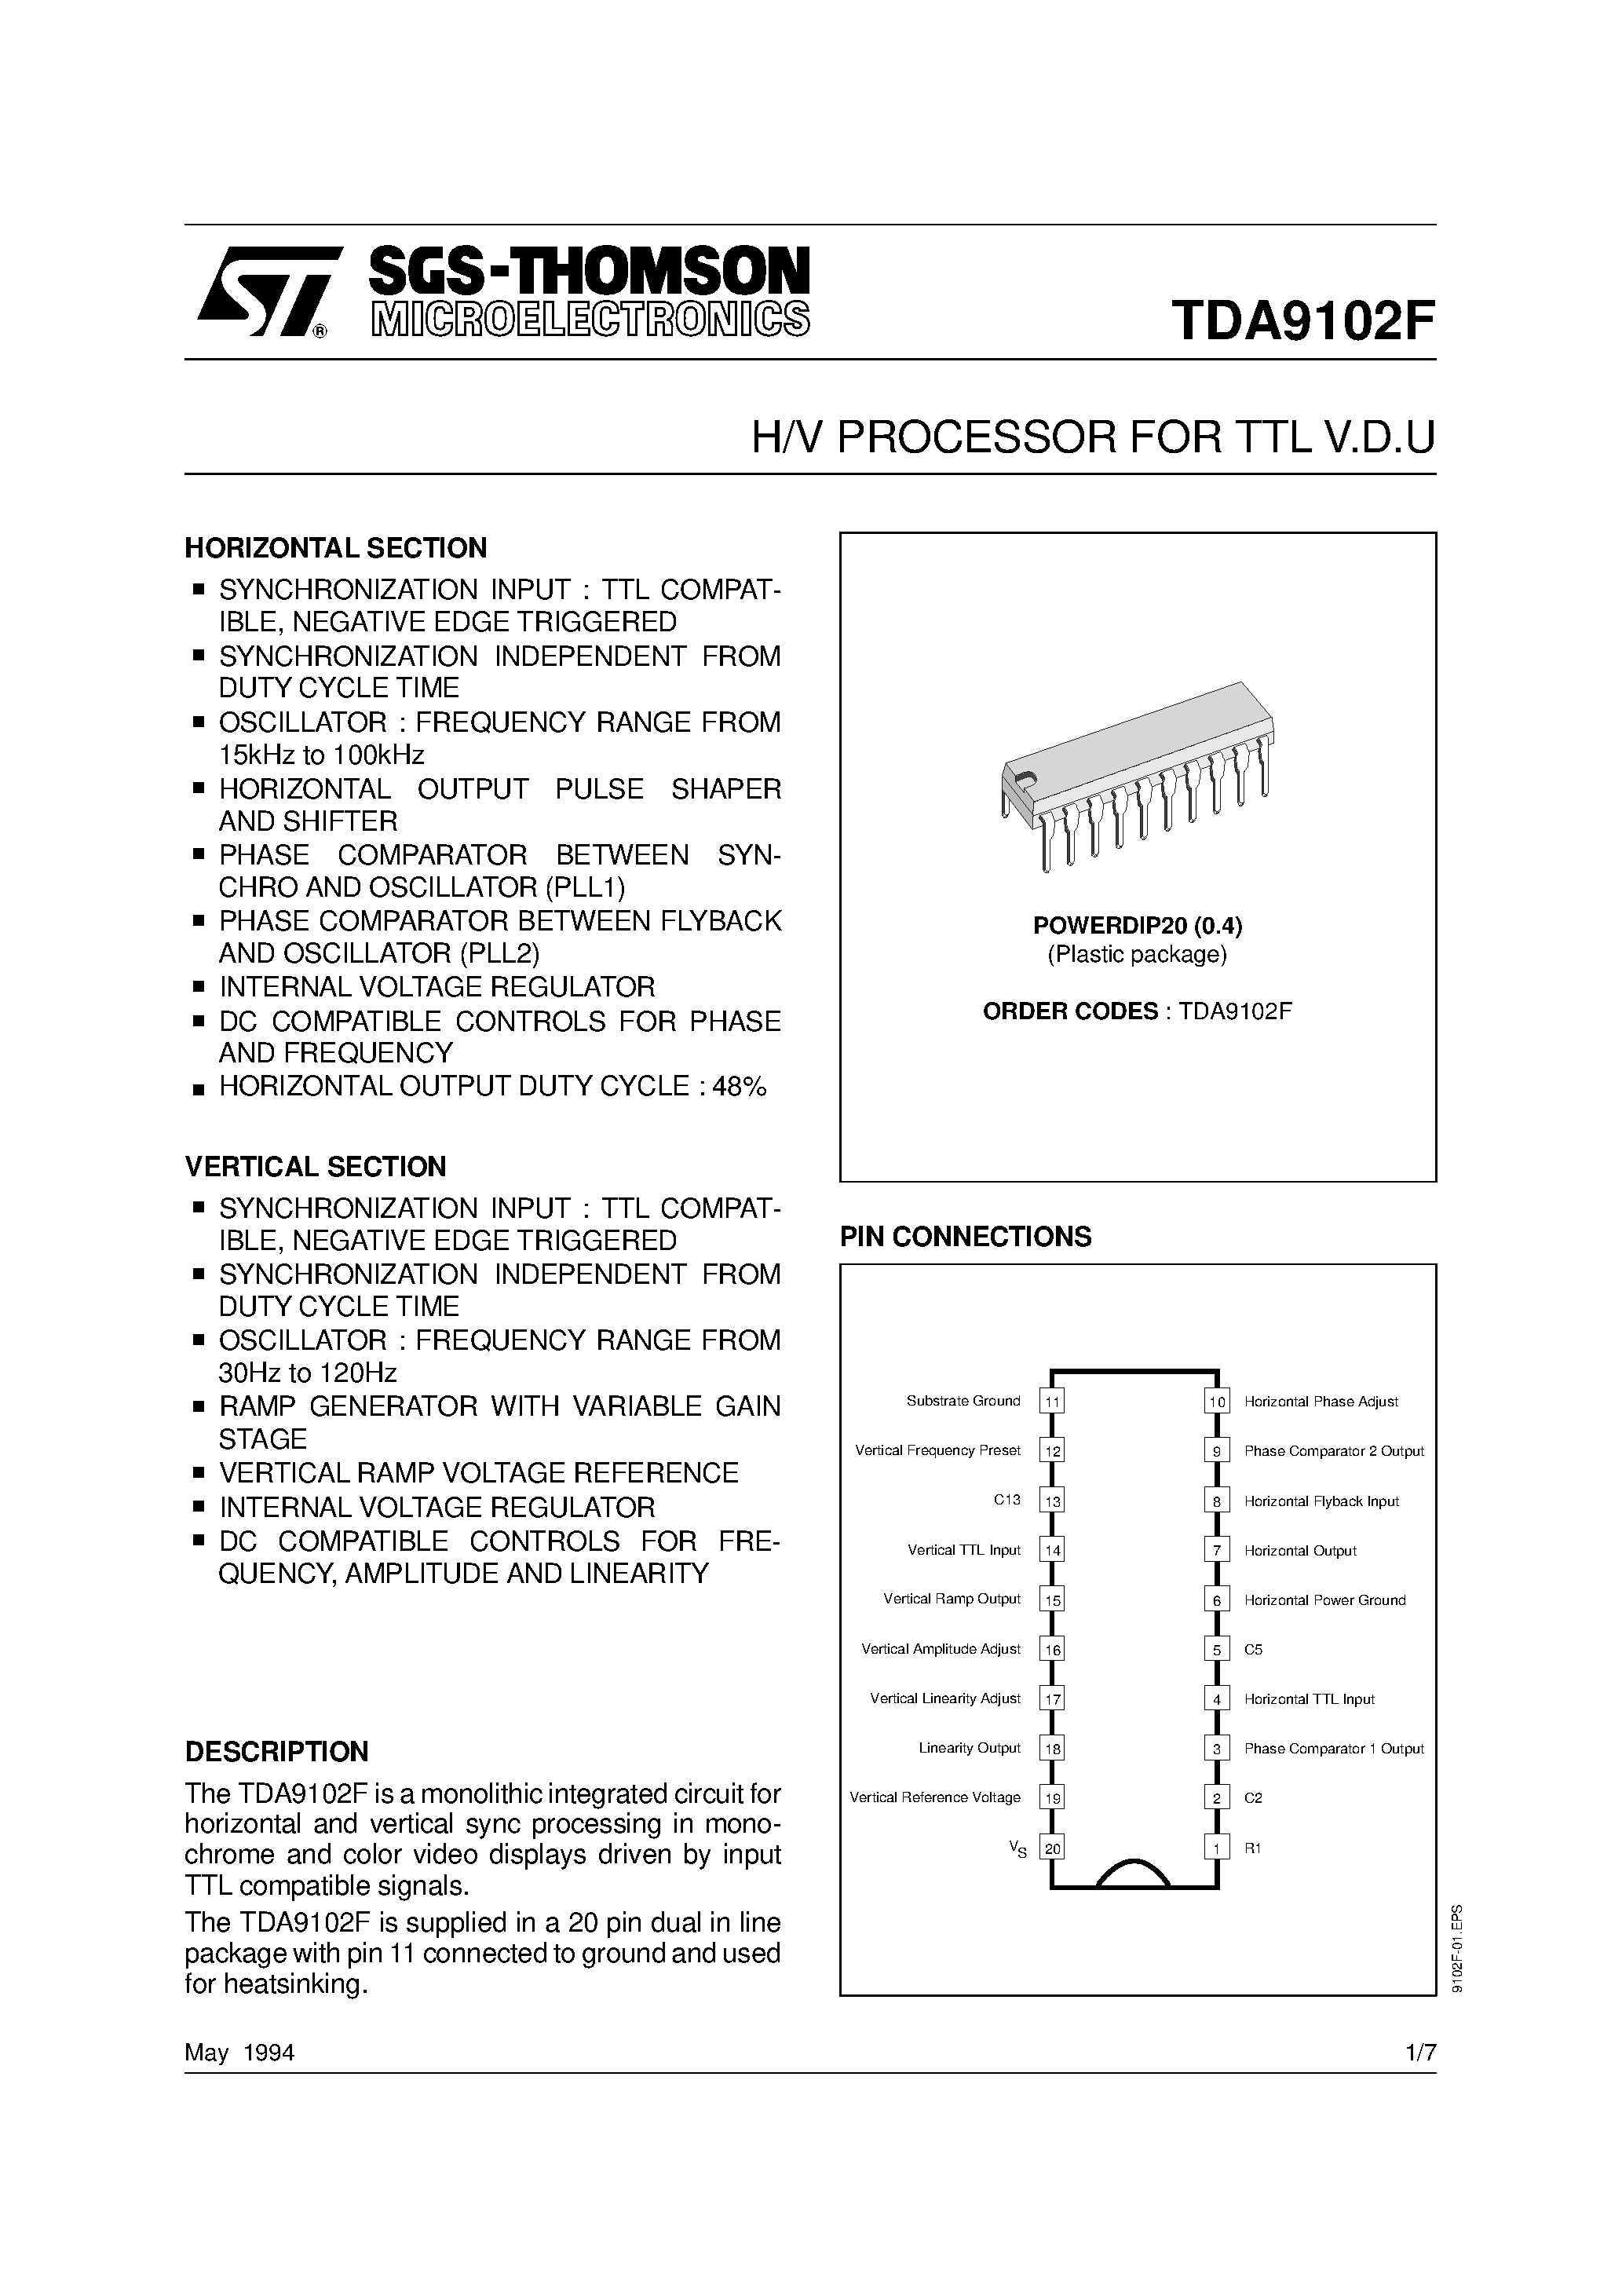 Даташит TDA9102F-H/V PROCESSOR FOR TTL V.D.U страница 1